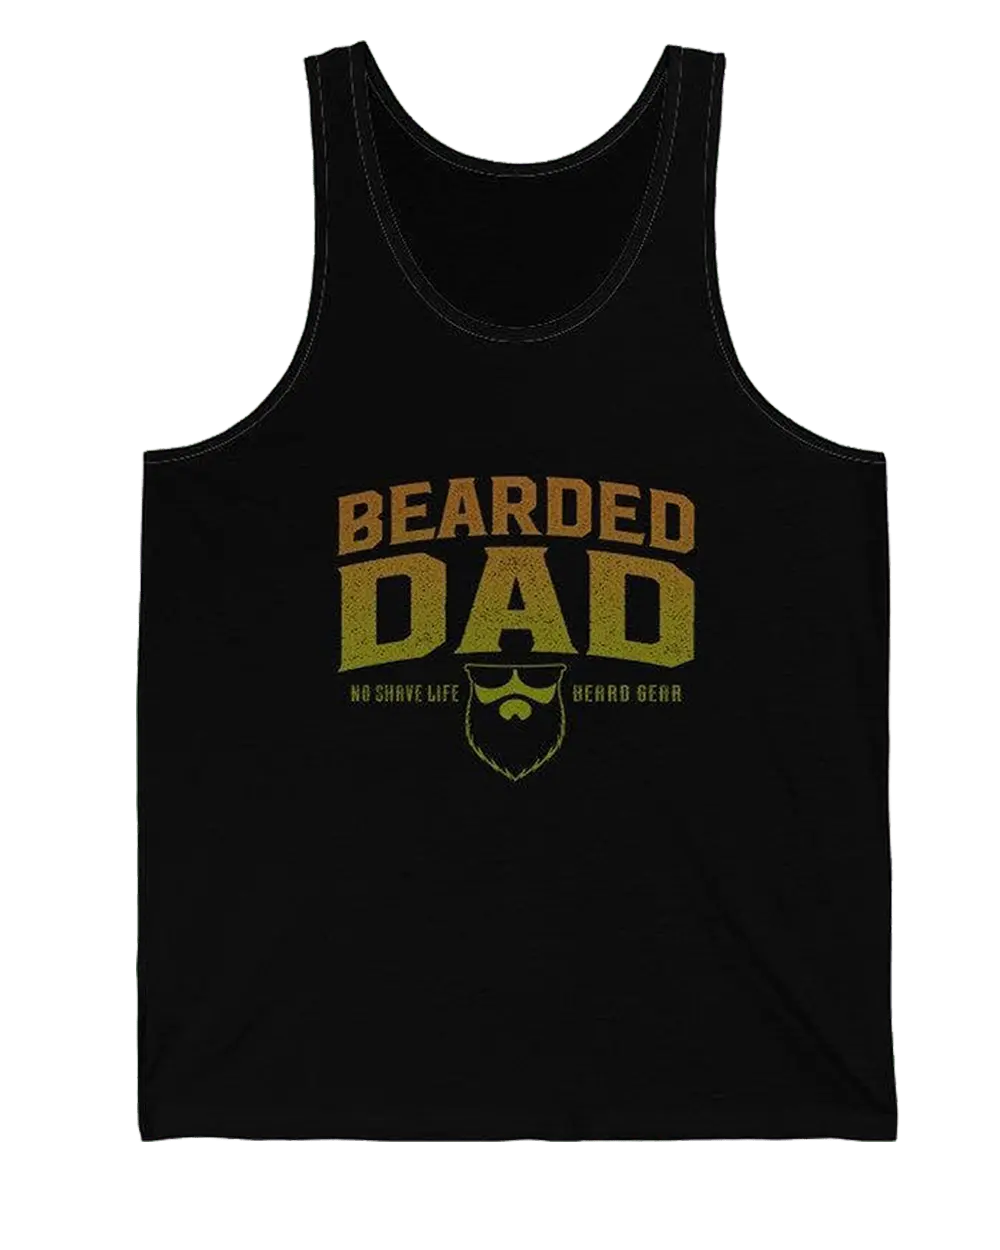 Bearded Dad Black Men's Tank Top|Mens Tank Top